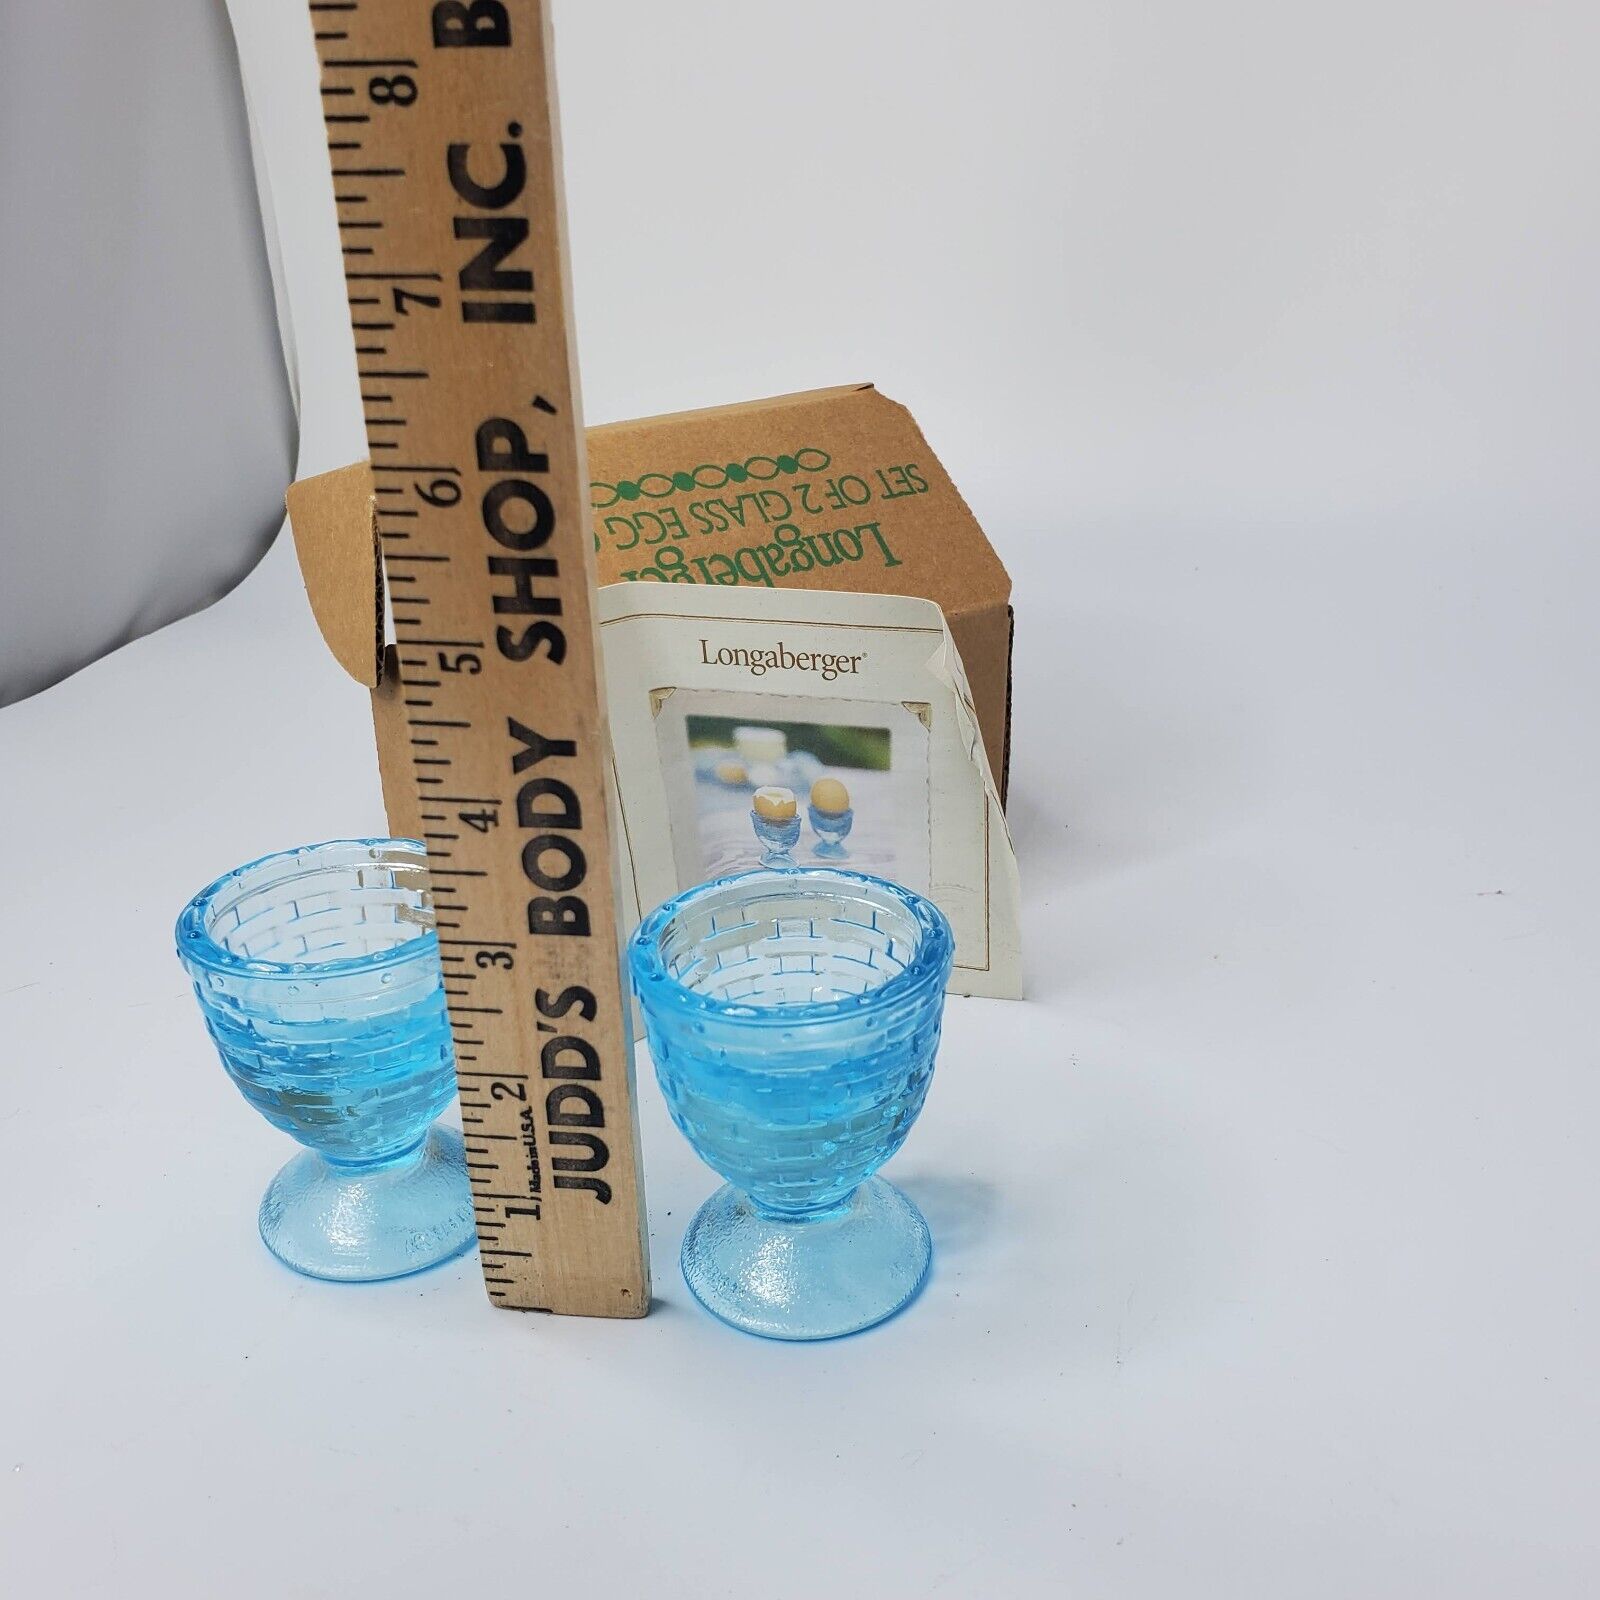 Longaberger 2002 Set Of 2 Blue Glass Egg Cups #10076 - Made In The USA - NIB Longaberger - фотография #3